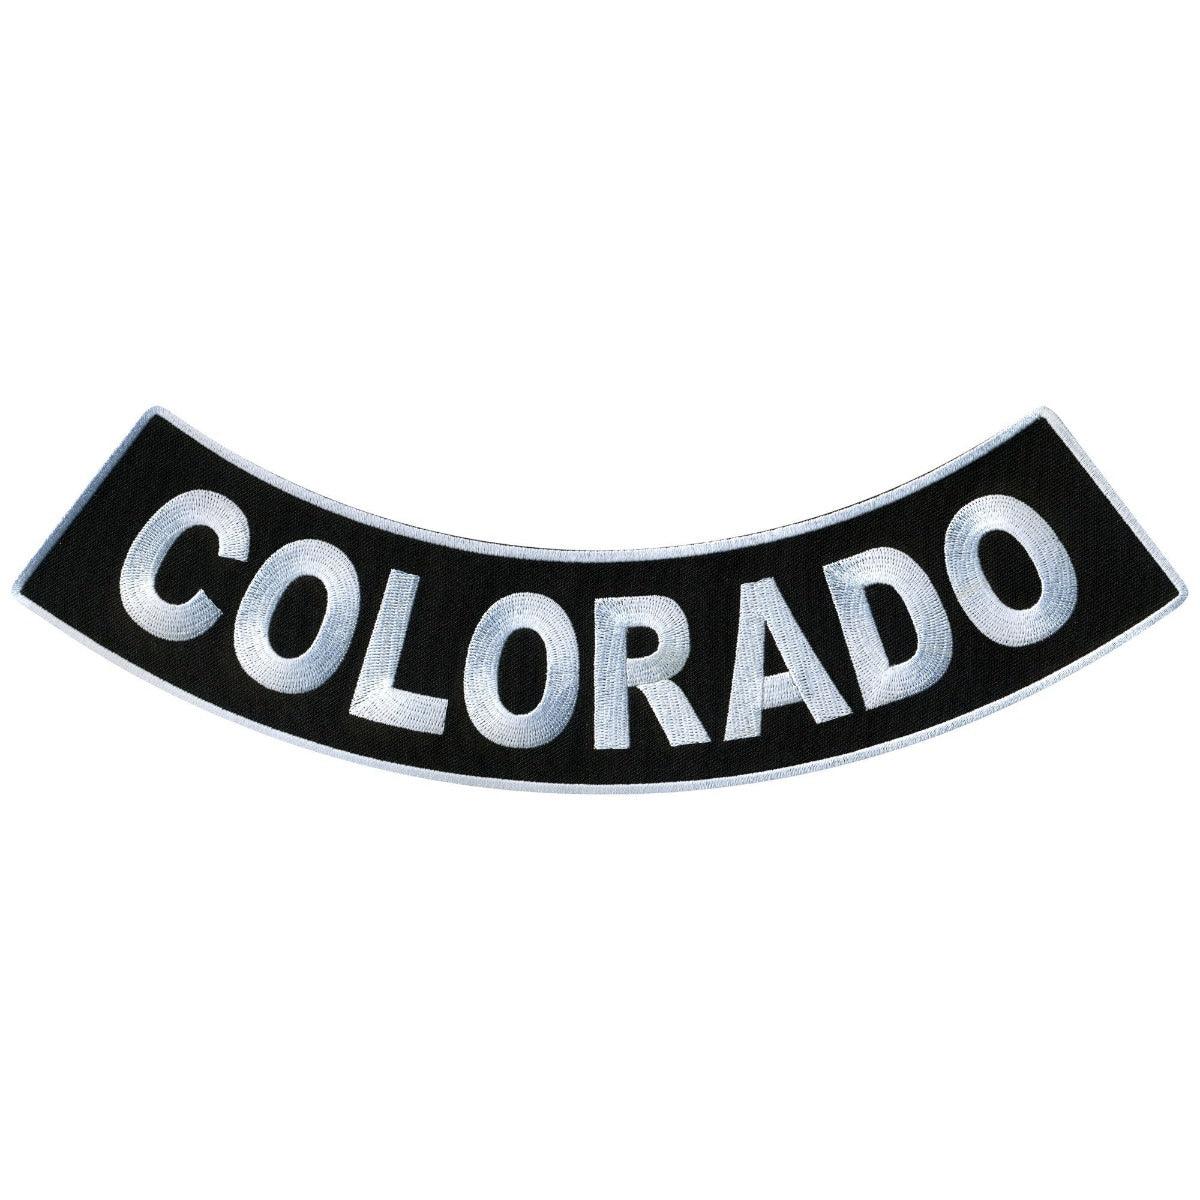 Hot Leathers Colorado 12” X 3” Bottom Rocker Patch - American Legend Rider